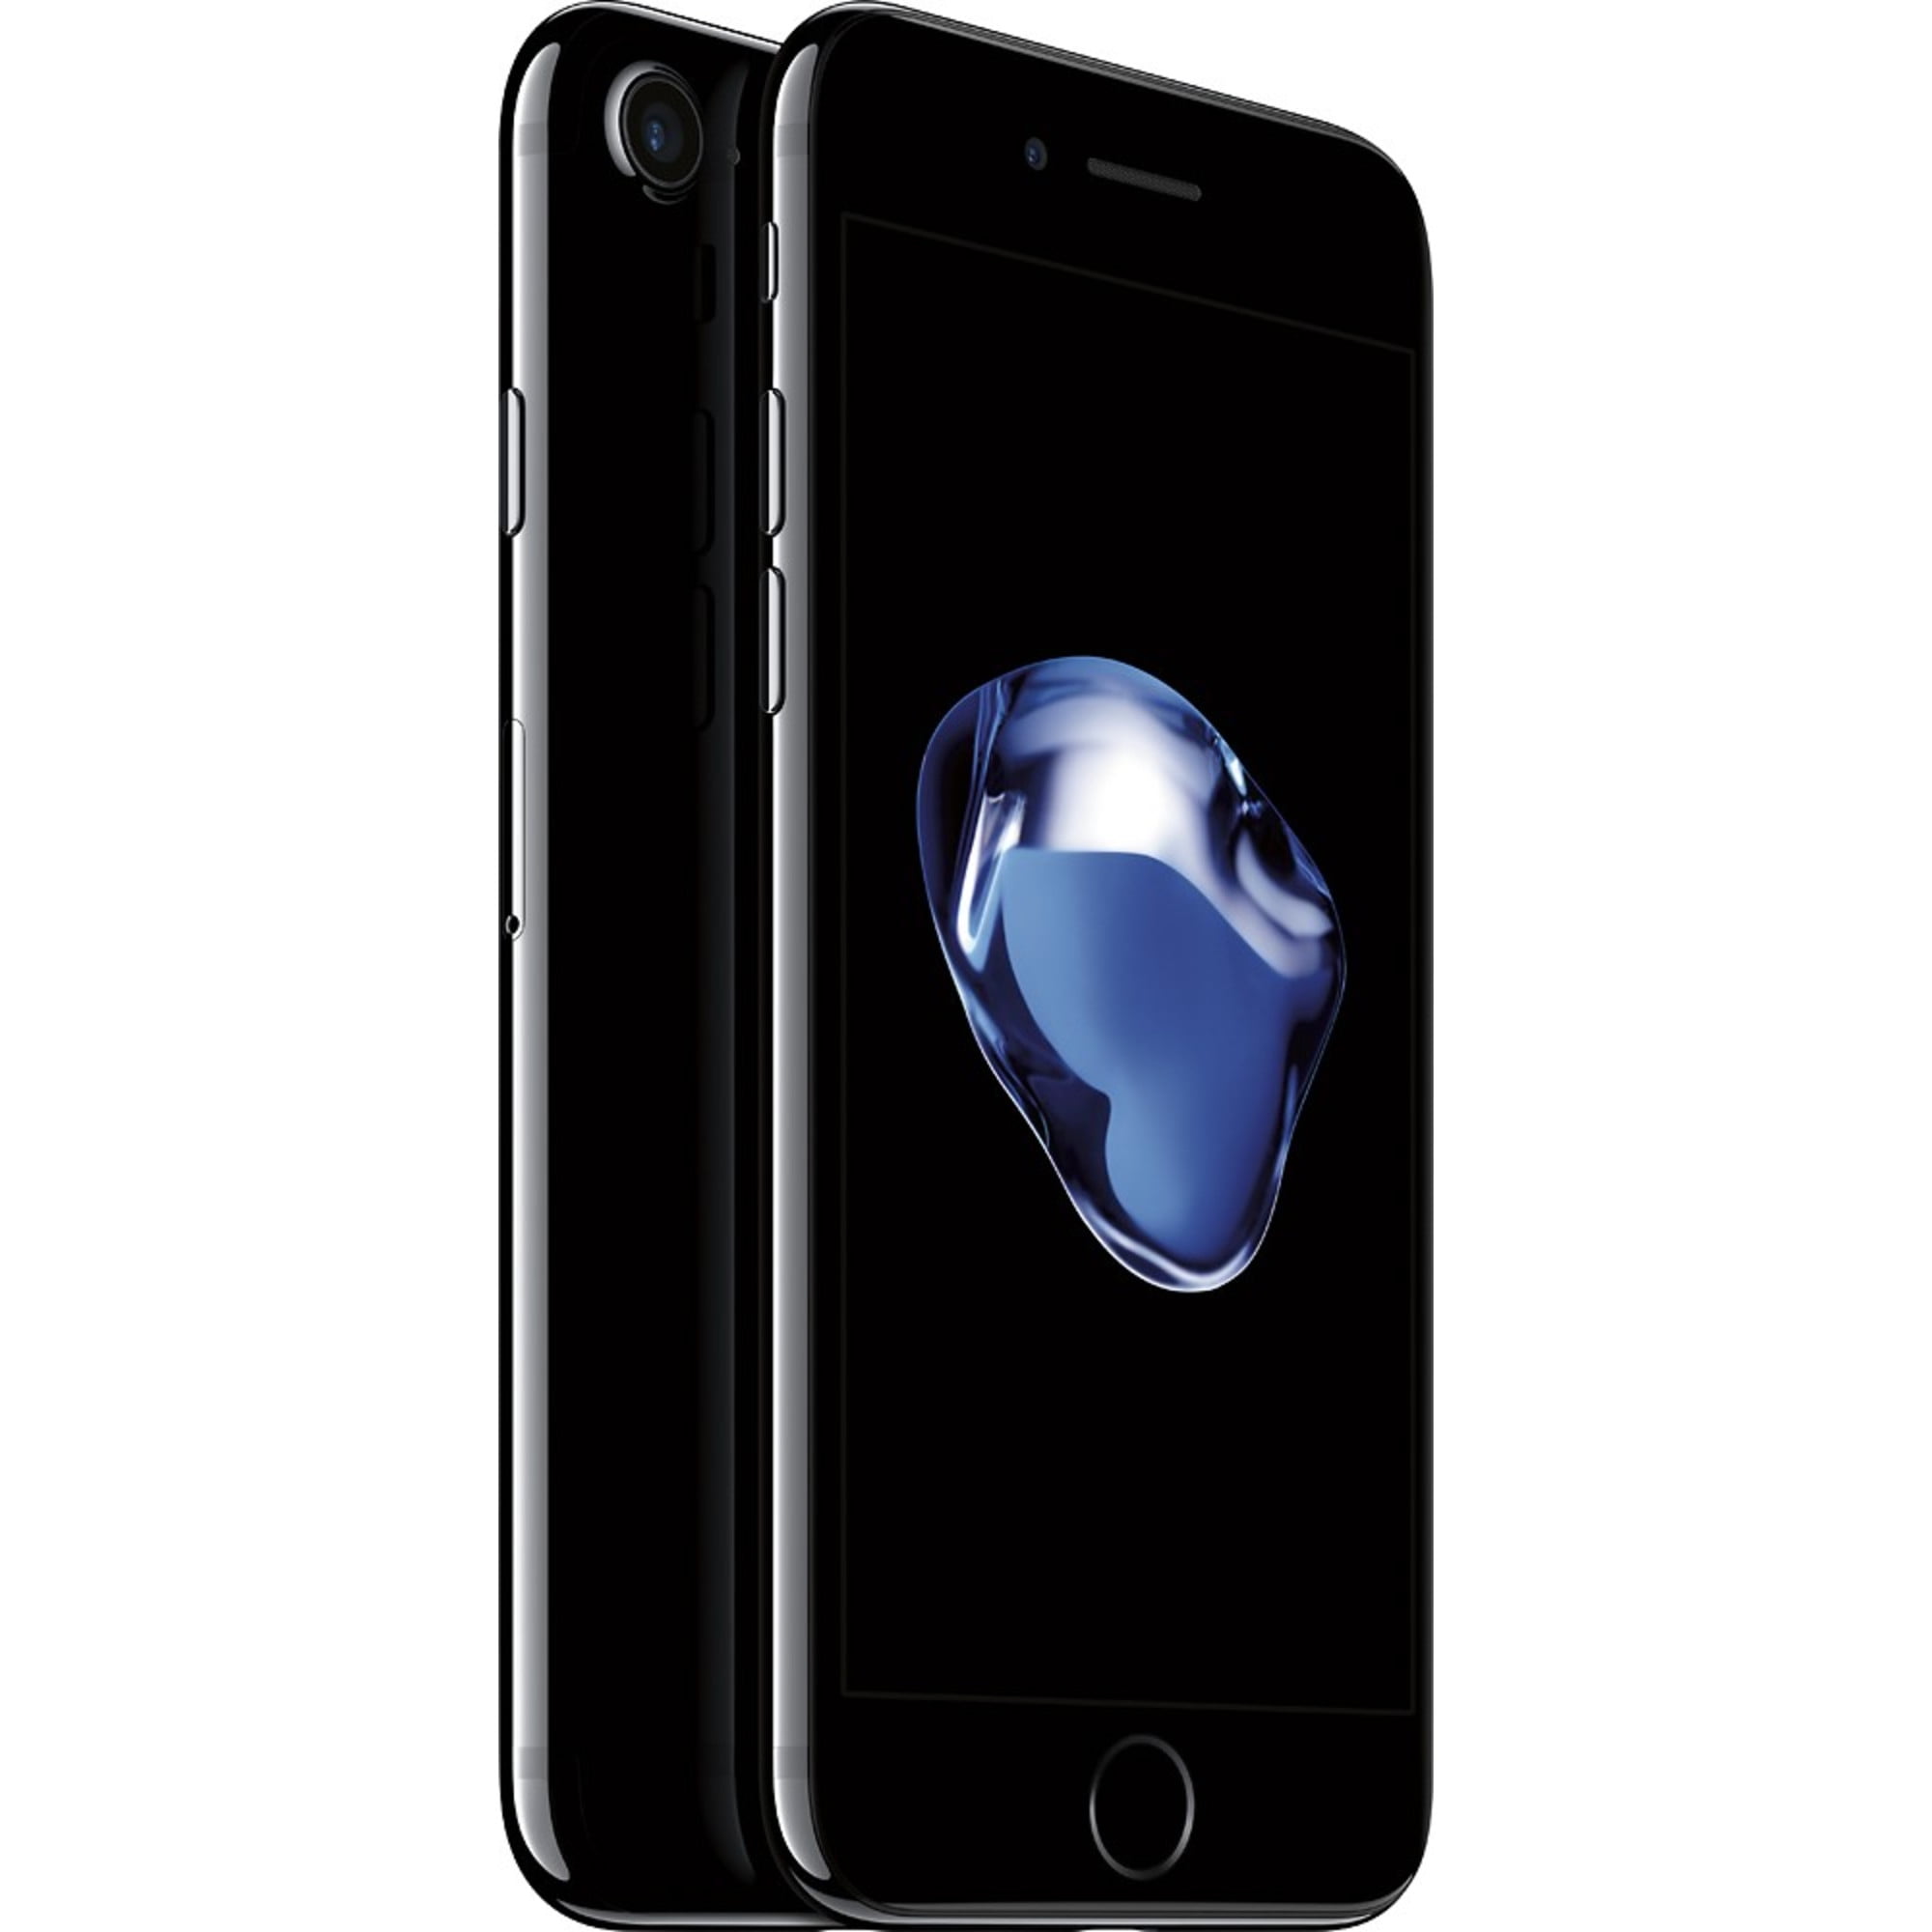 Pre-Owned Apple iPhone 7 32GB GSM Unlocked - Jet Black +